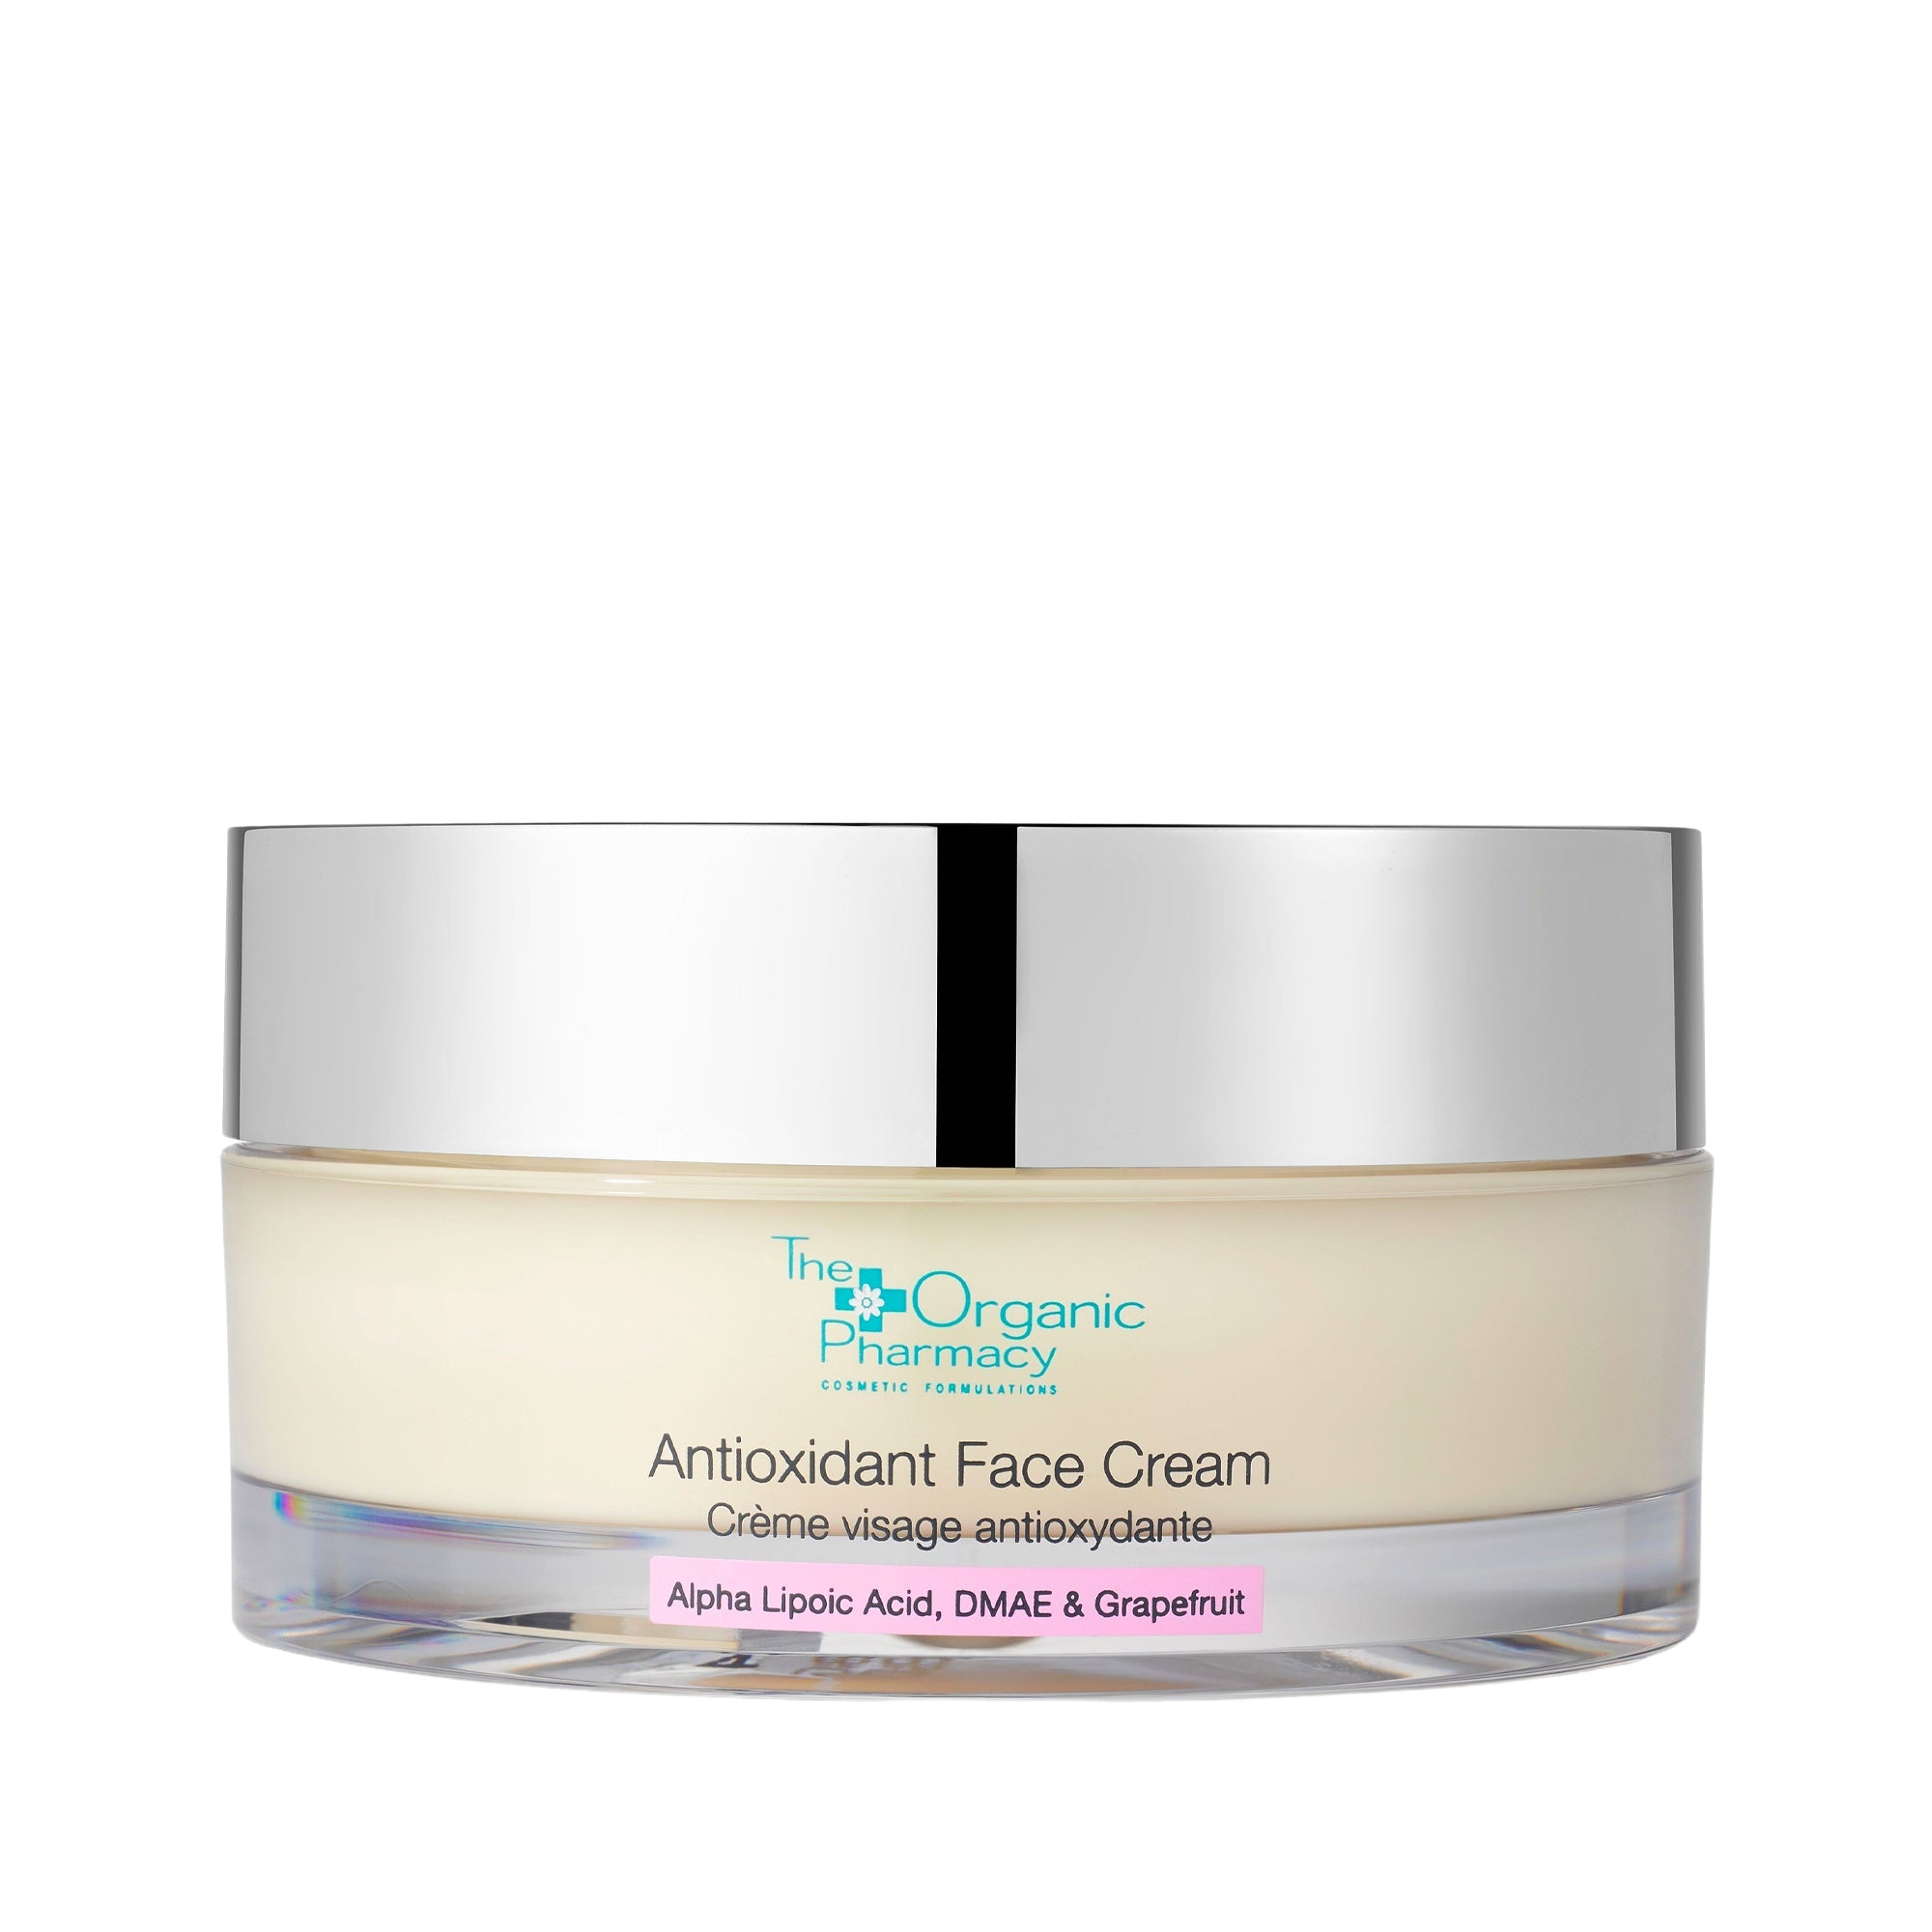 Crème visage Antioxydante – Antioxidant Face Cream Antioxidative Gesichtscreme – Antioxidative Gesichtscreme - The Organic Pharmacy